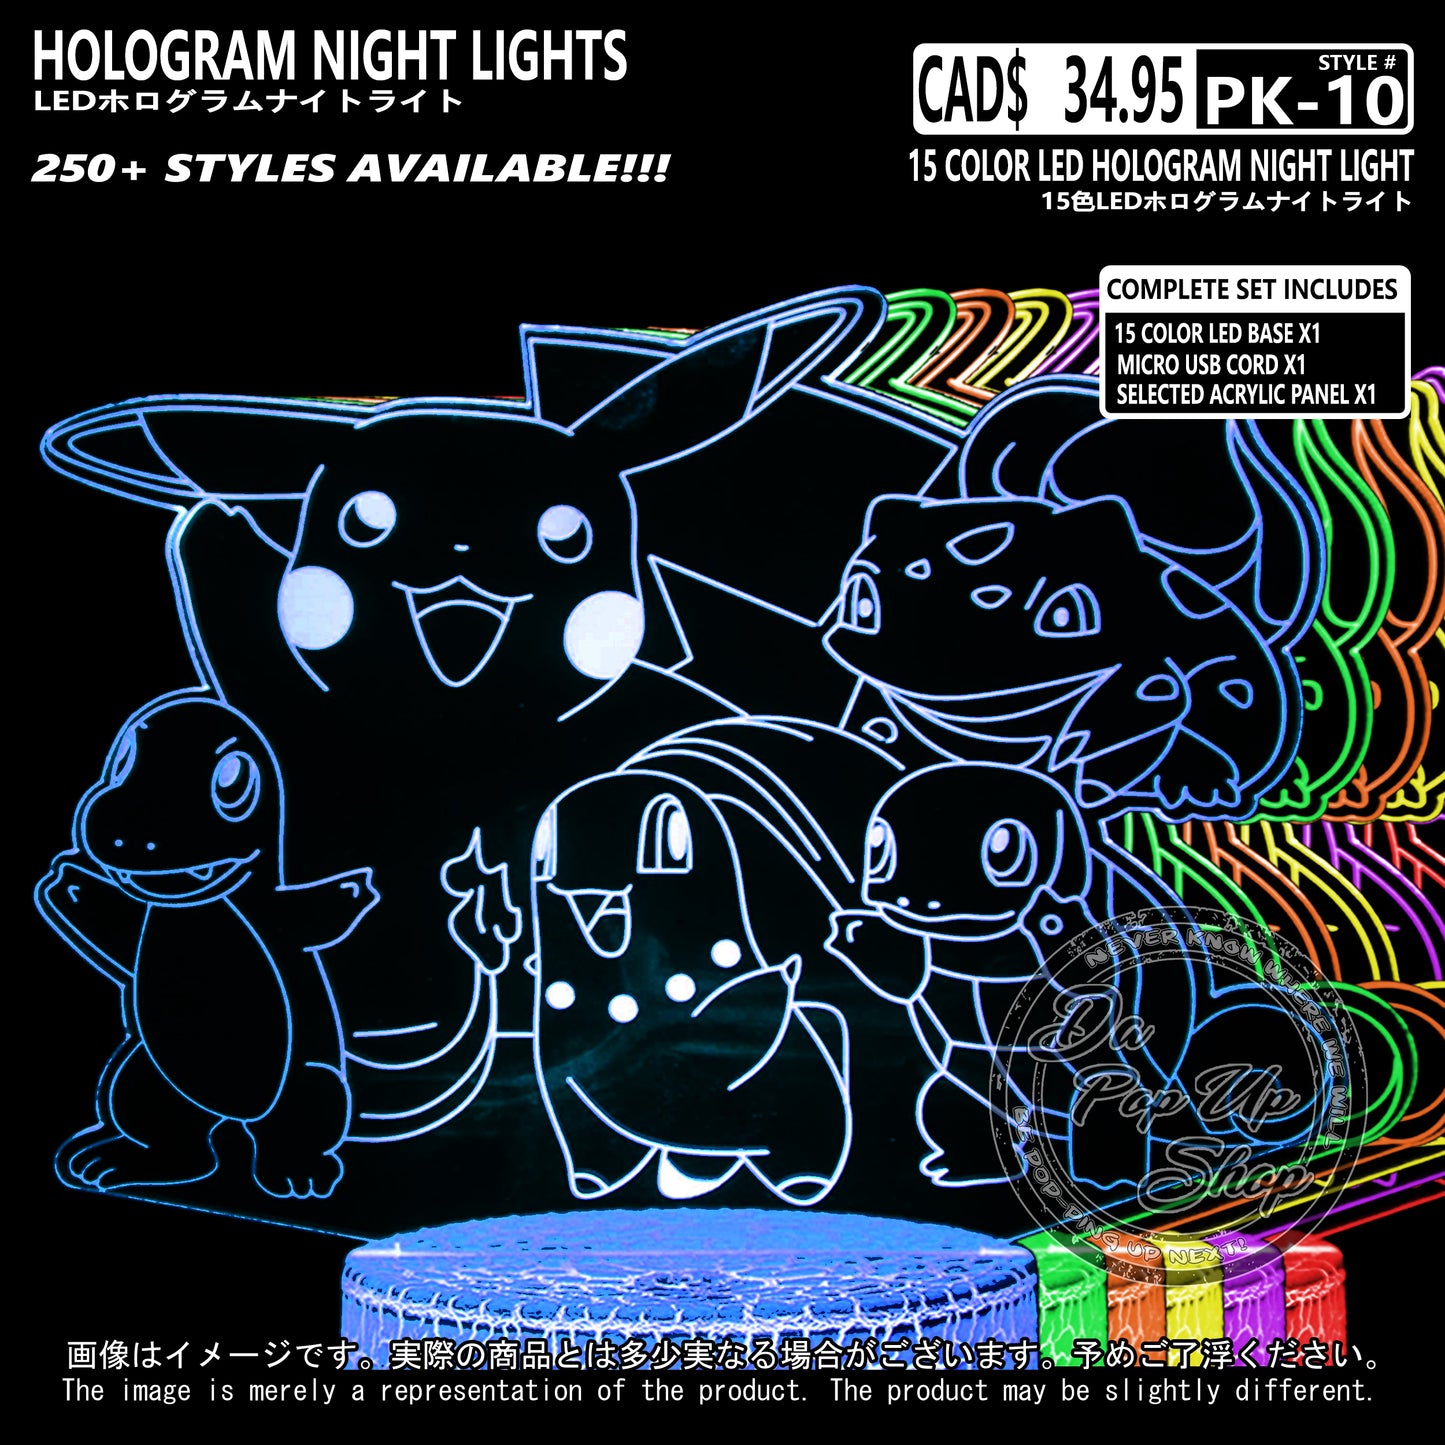 (PKM-10) Pokemon Hologram LED Night Light